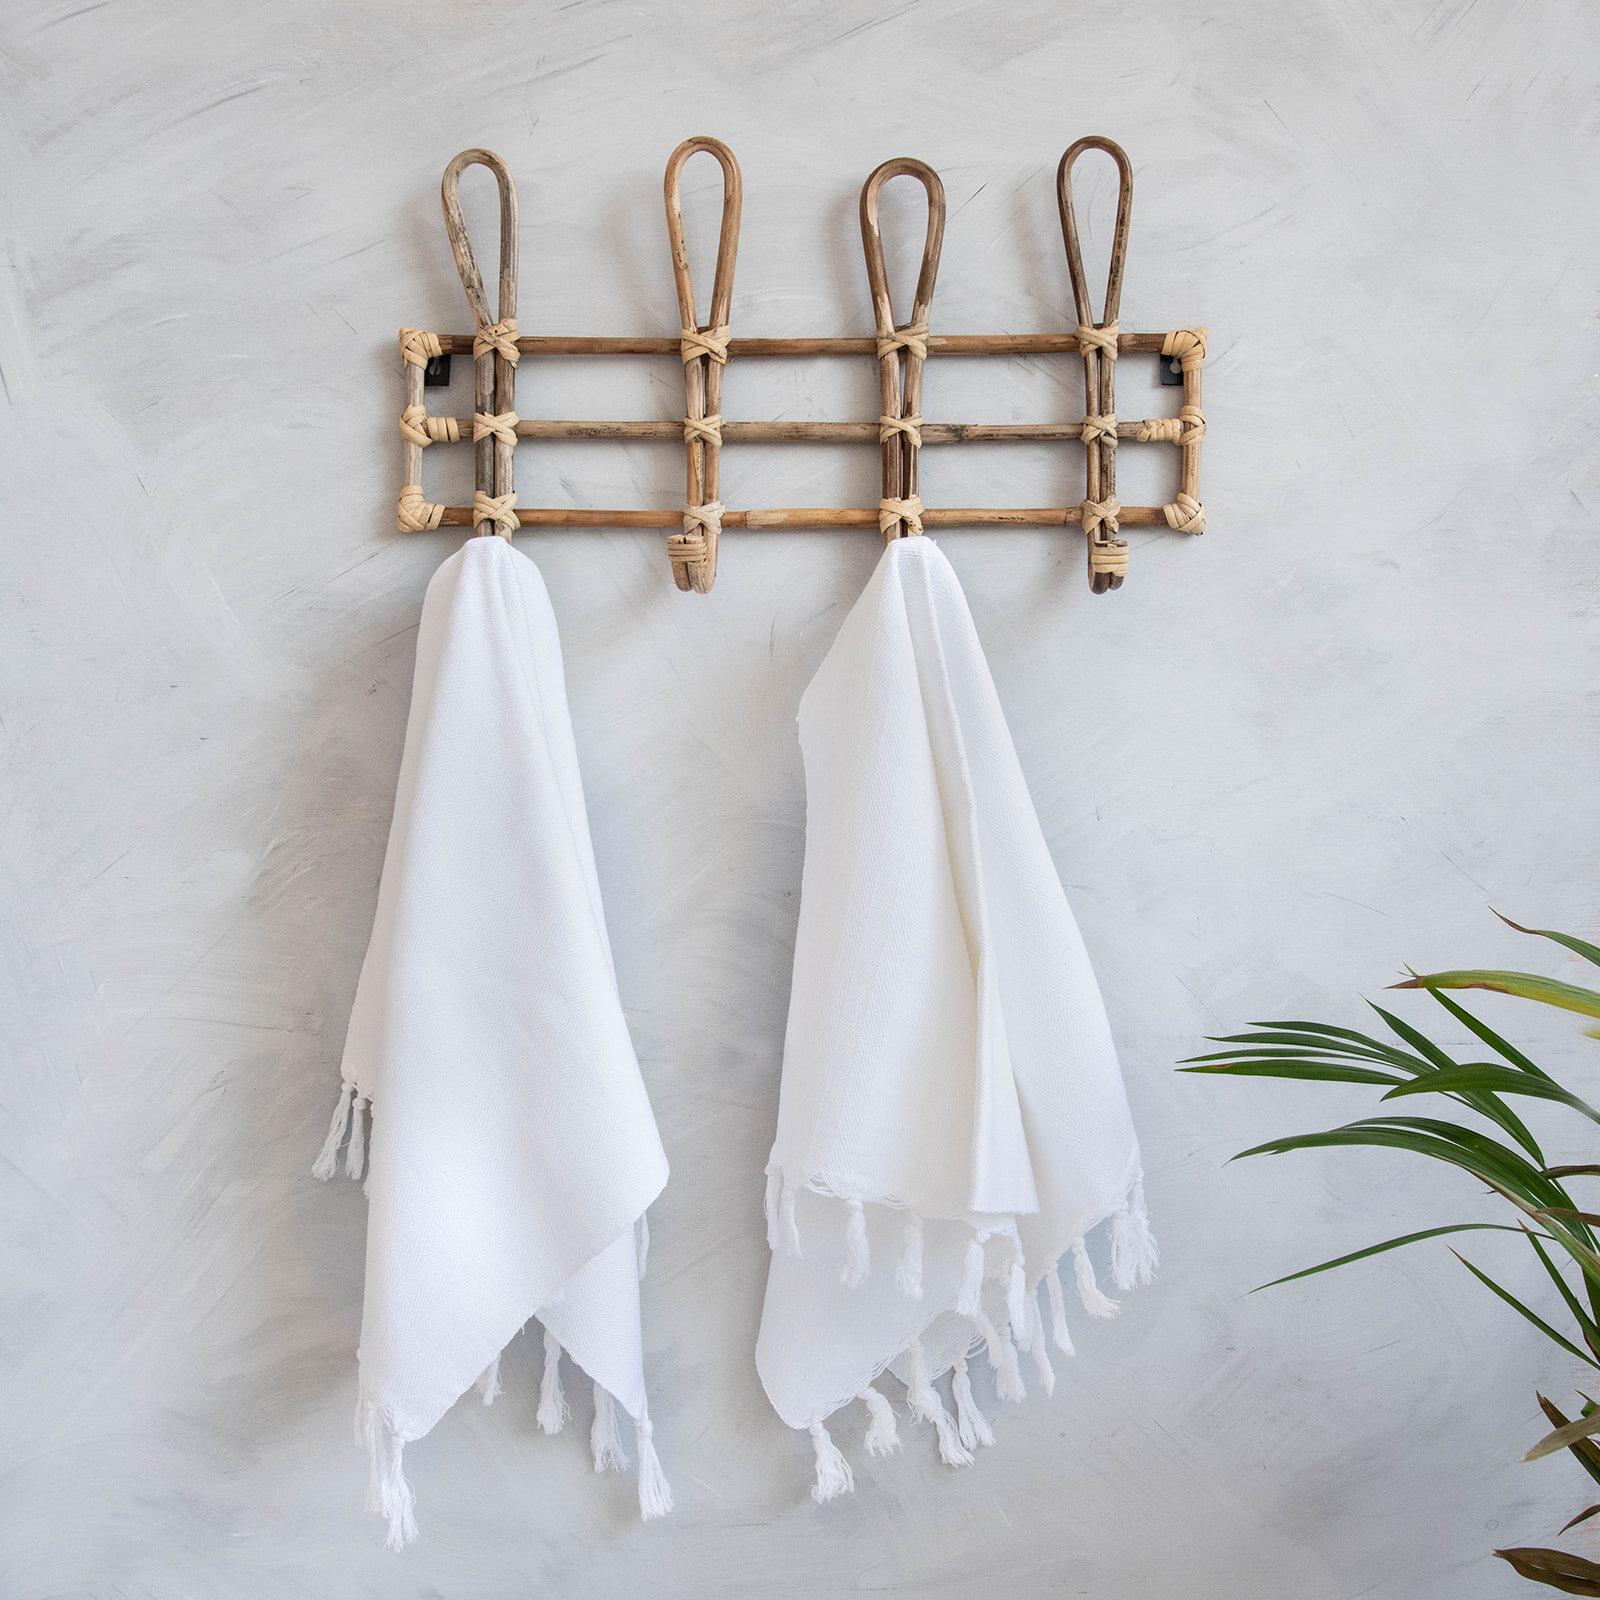 Organic, hand woven towels